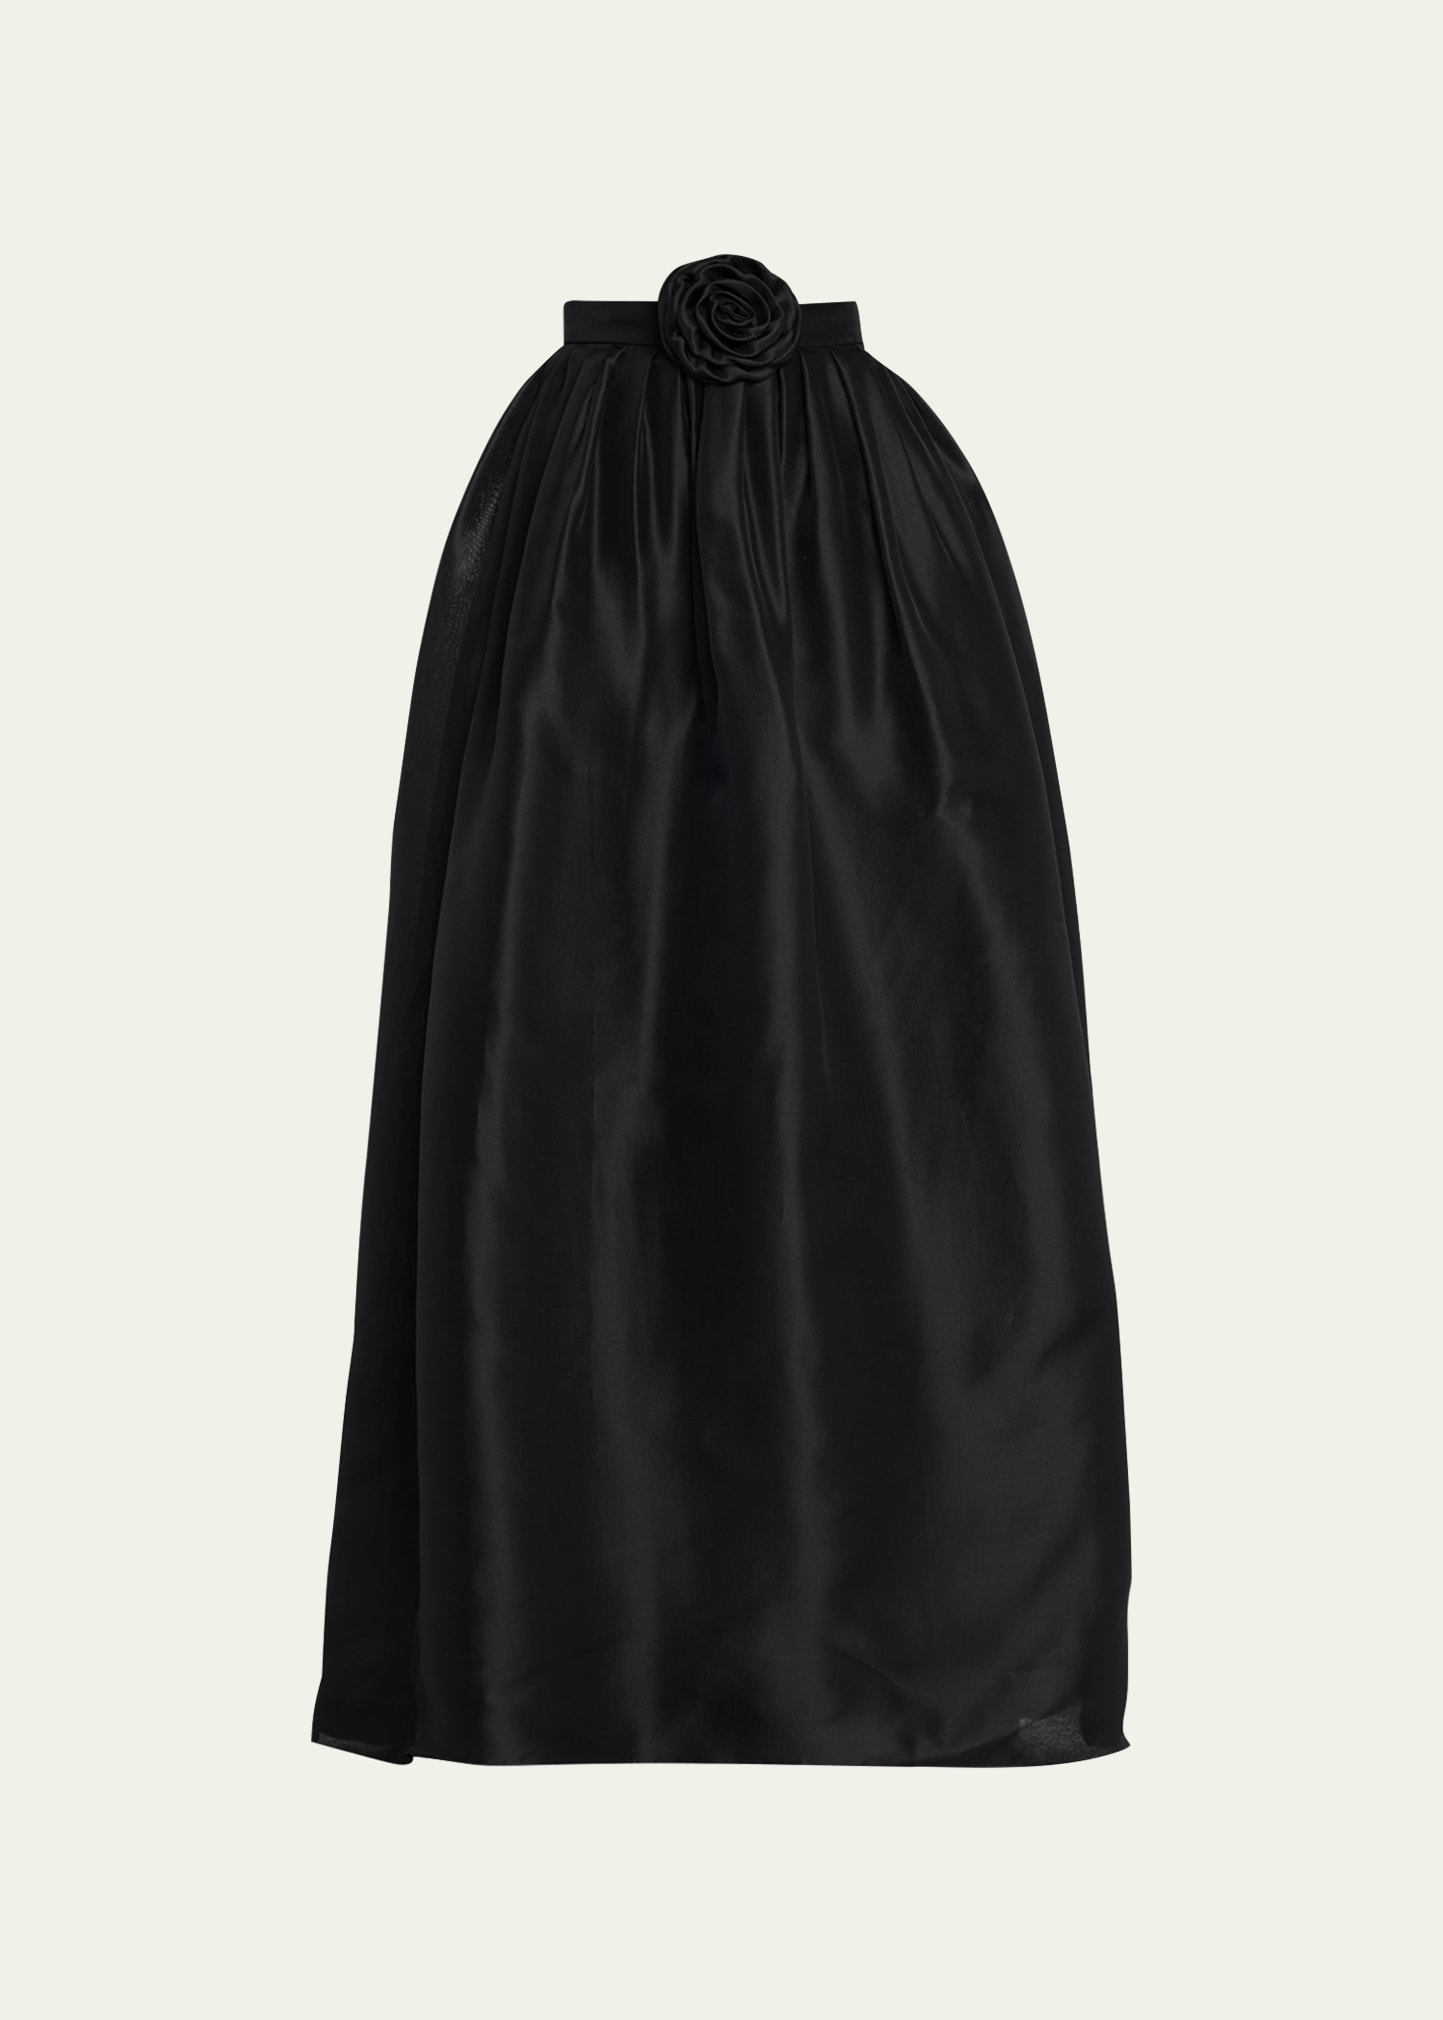 Full Ball Skirt with Removable Flower Detail